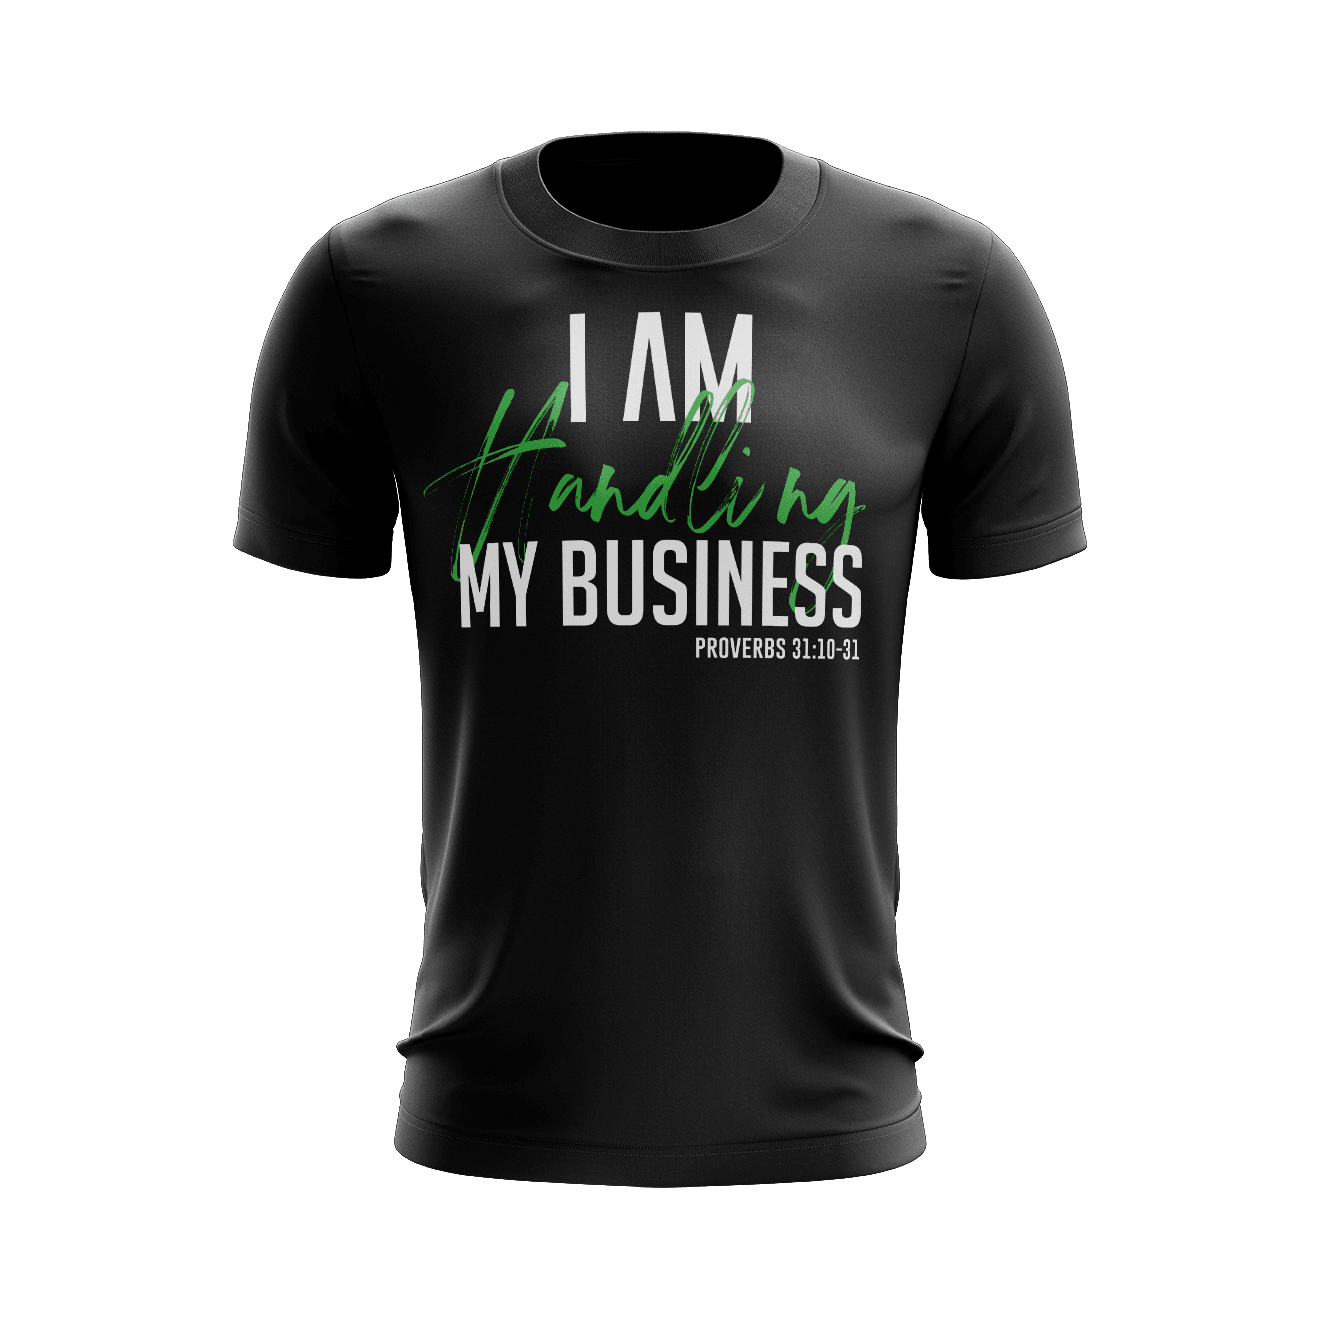 I AM Handling My Business Shirt (Black) - Vision Apparel Inc.